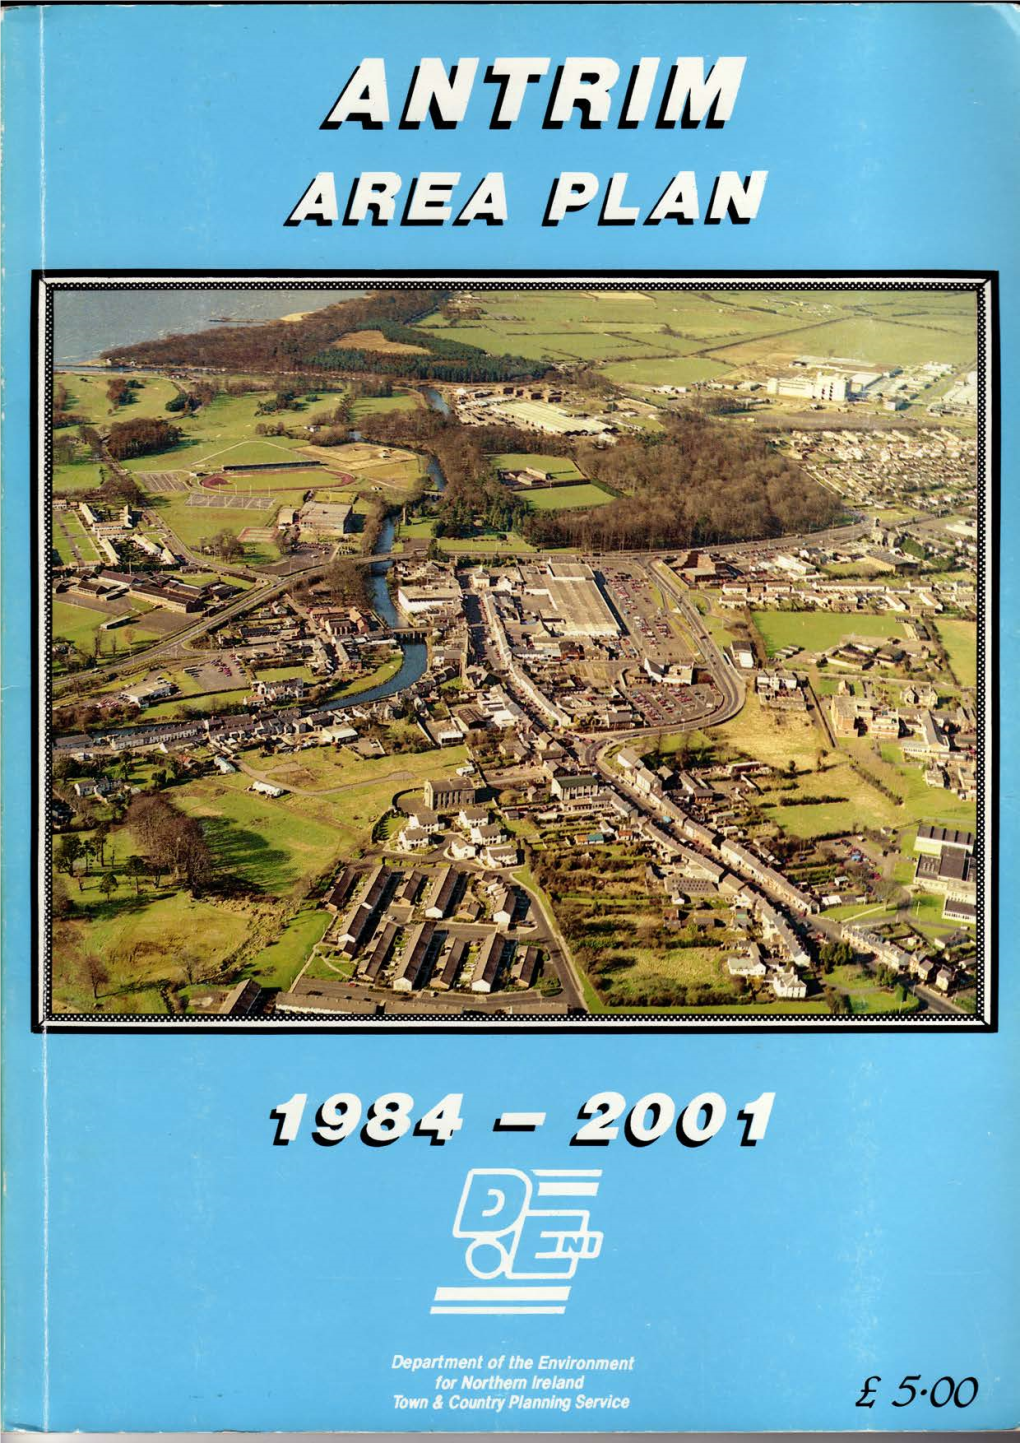 Antrim Area Plan 1984 - 2001